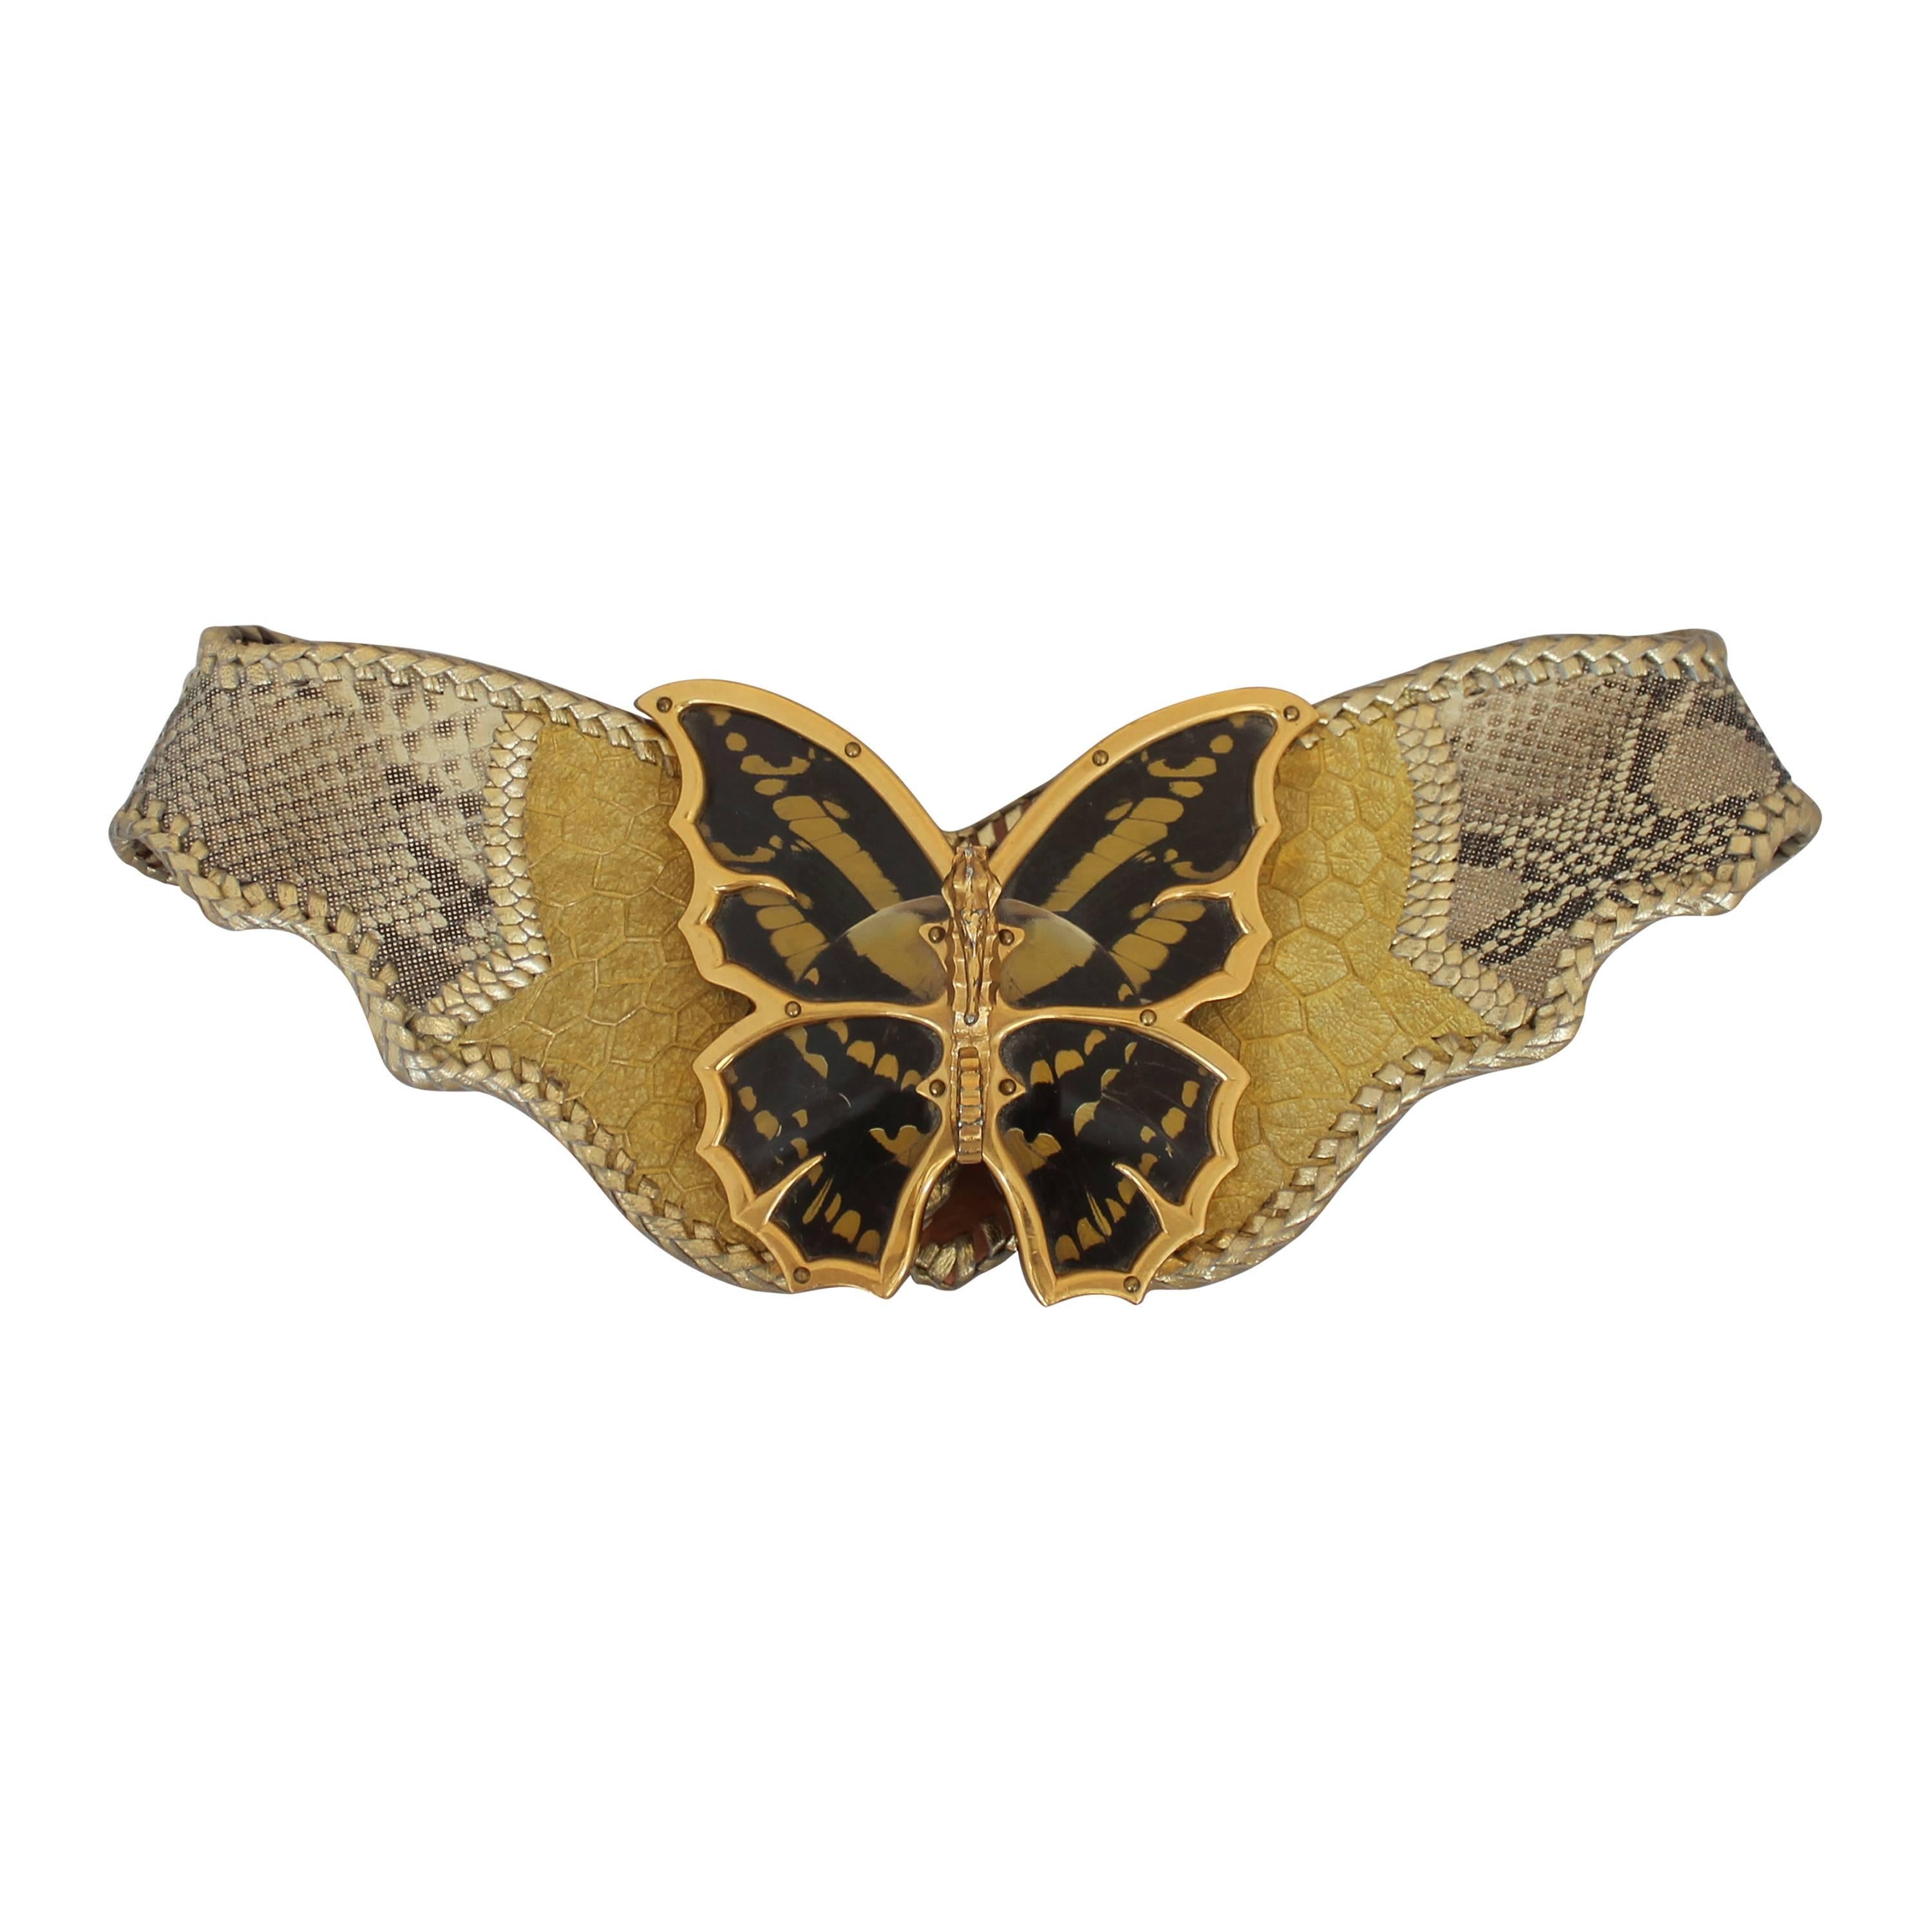 Cesar Ugarte Vintage Gold Python Belt with Brass Butterfly Buckle - cc 1980's